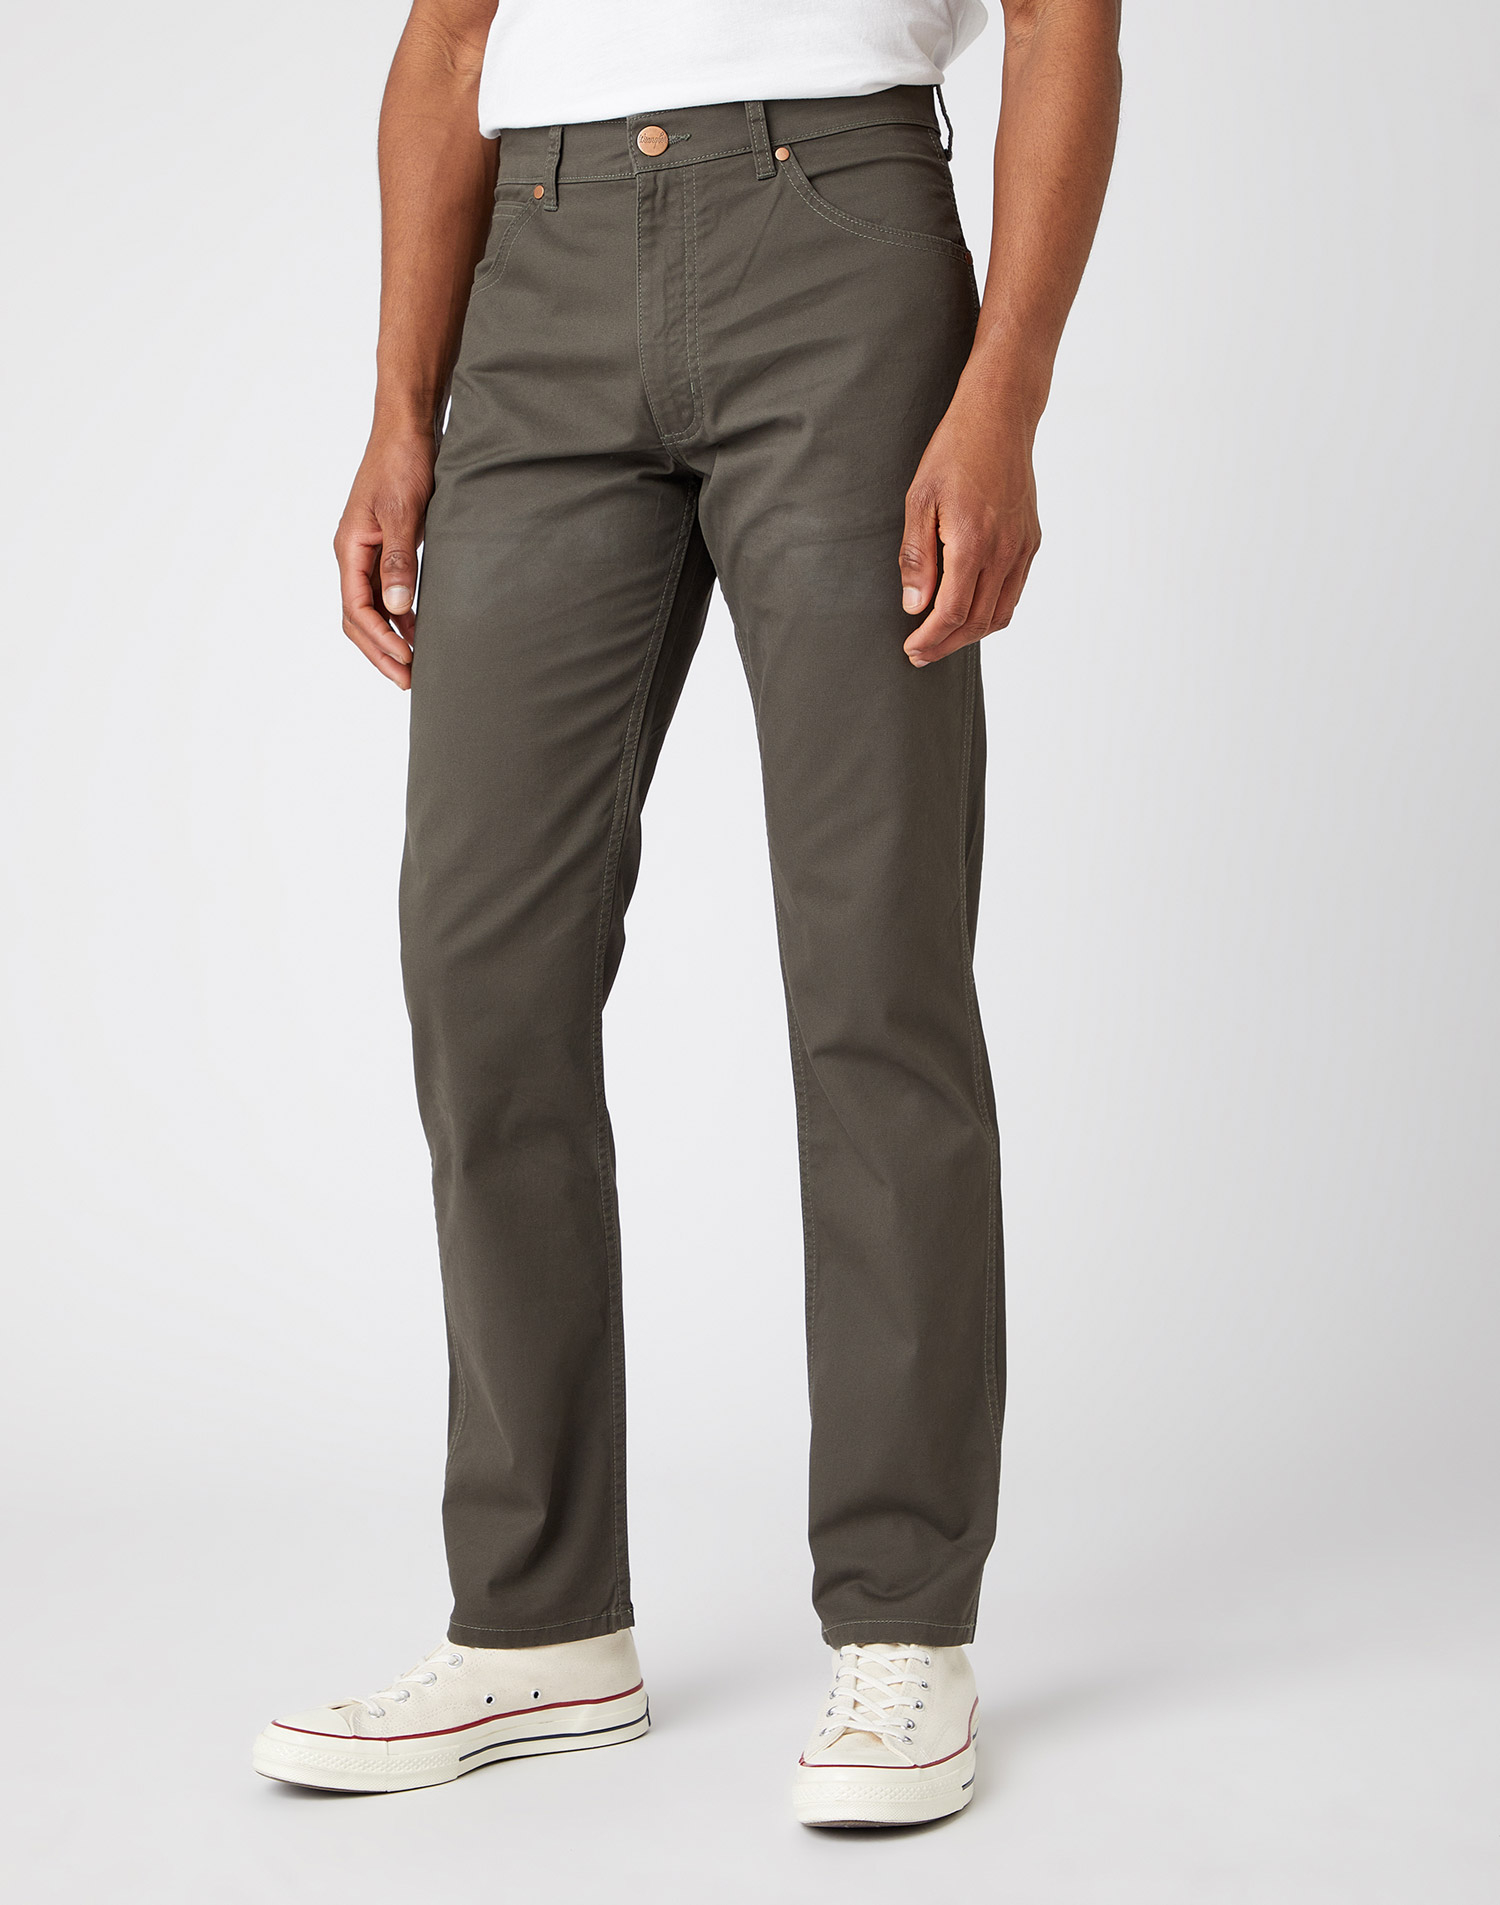 Wrangler Greensboro slim pantalons texans de gavardina d'home W15QKA221 caqui